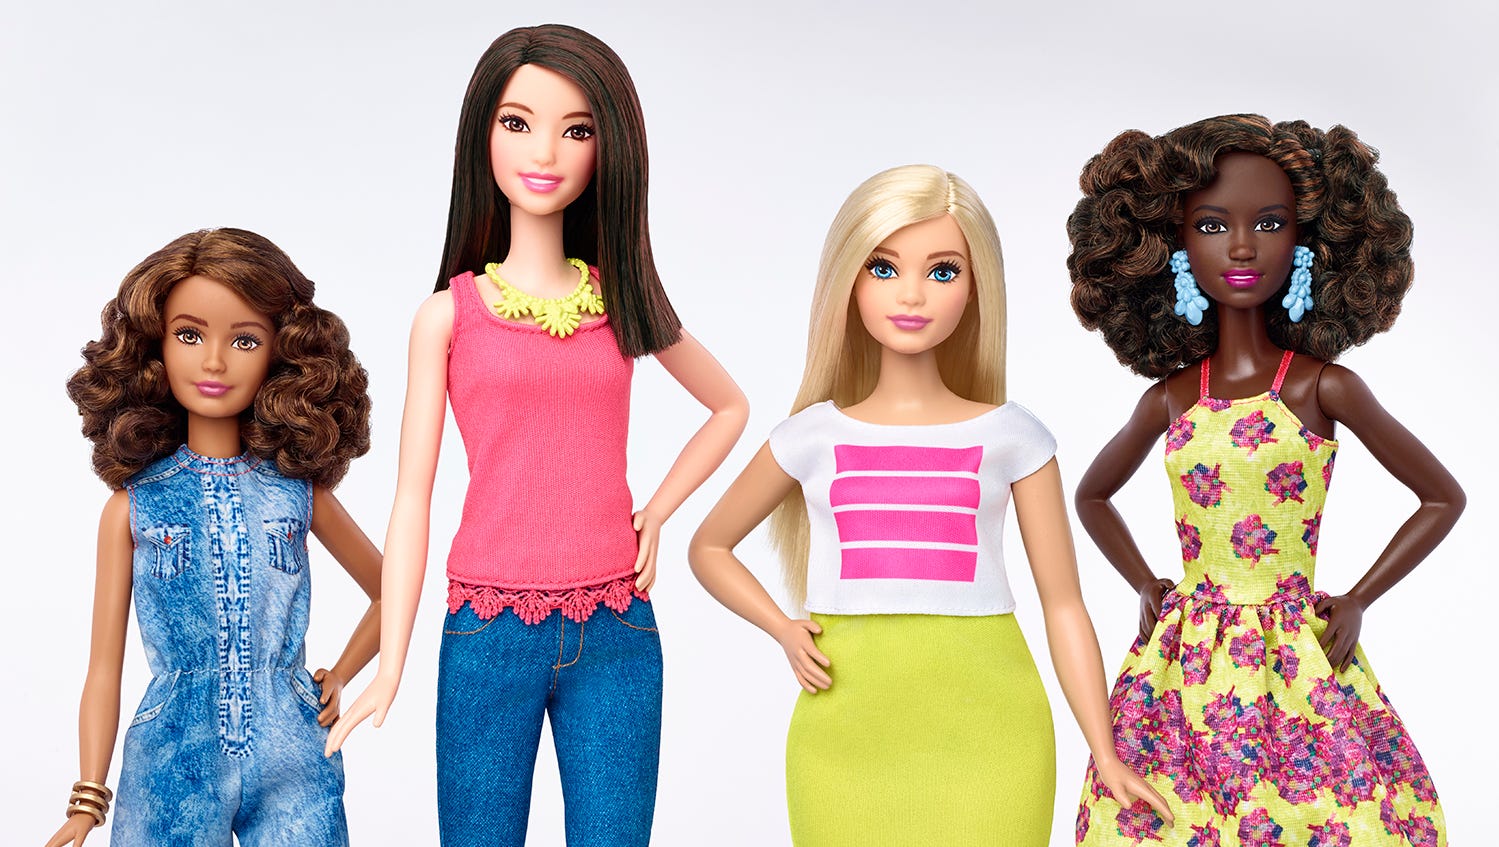 stilte verzameling democratische Partij Barbie's new shapes: Tall, petite and curvy